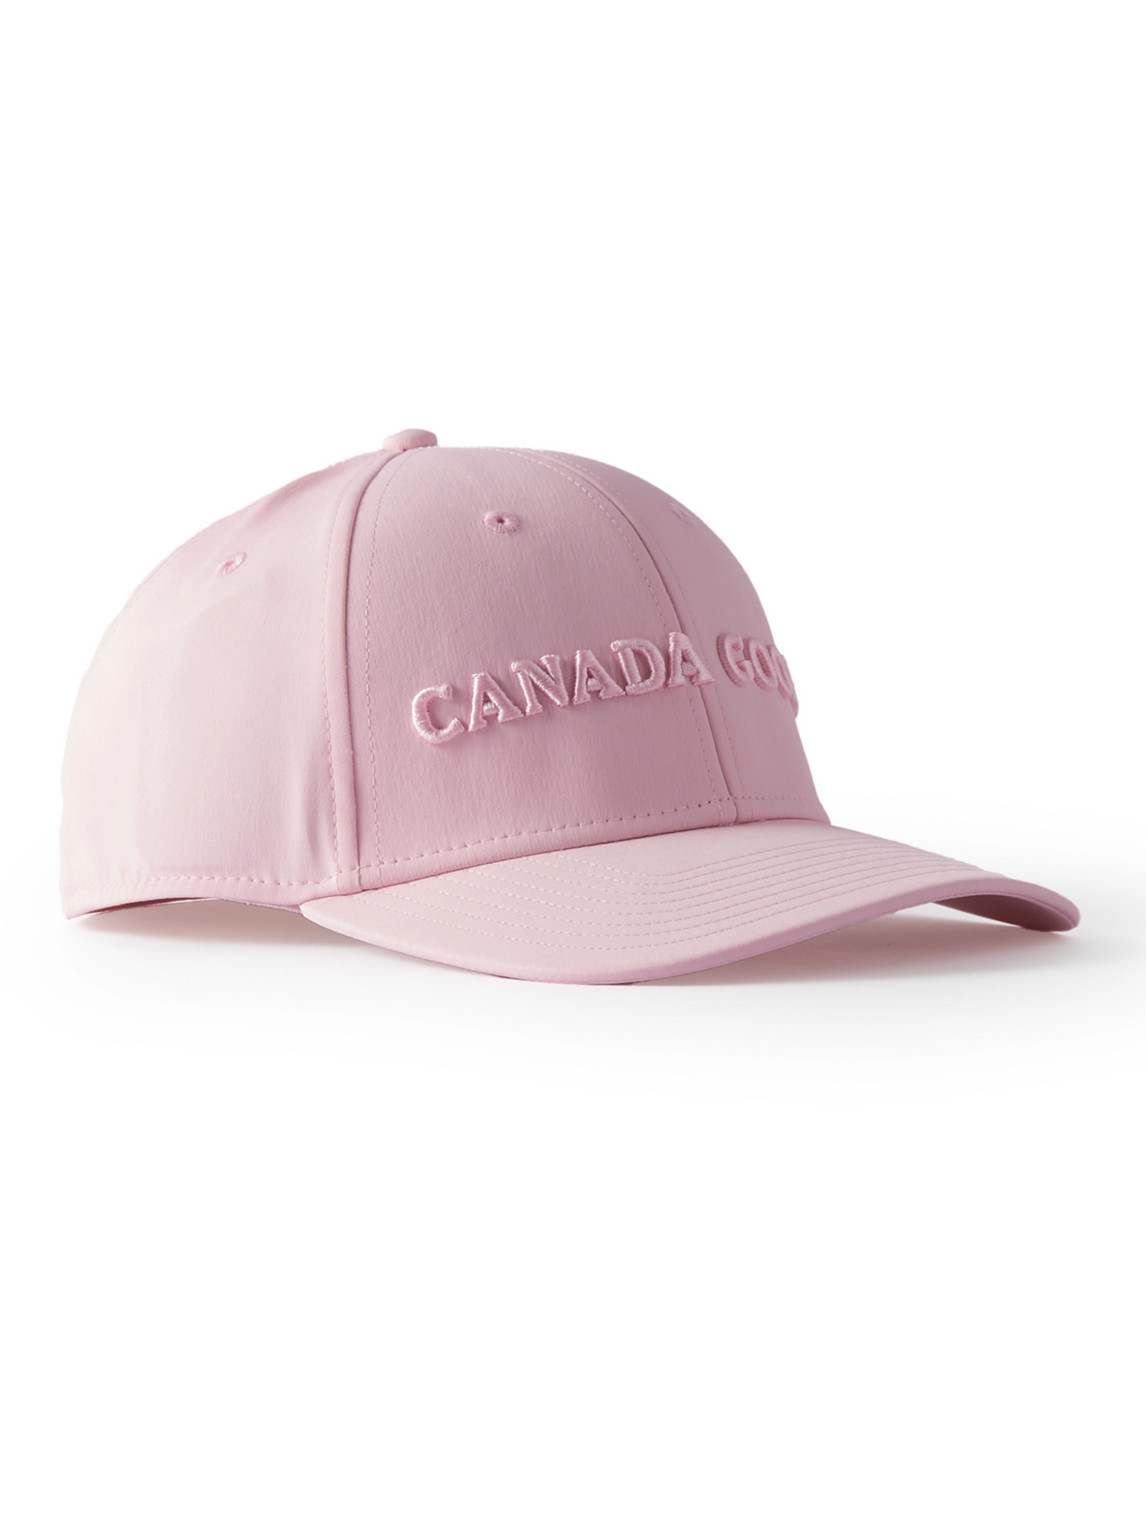 Canada Goose - Logo-Embroidered Cotton-Blend Canvas Baseball Cap - Men - Pink - L/XL von Canada Goose